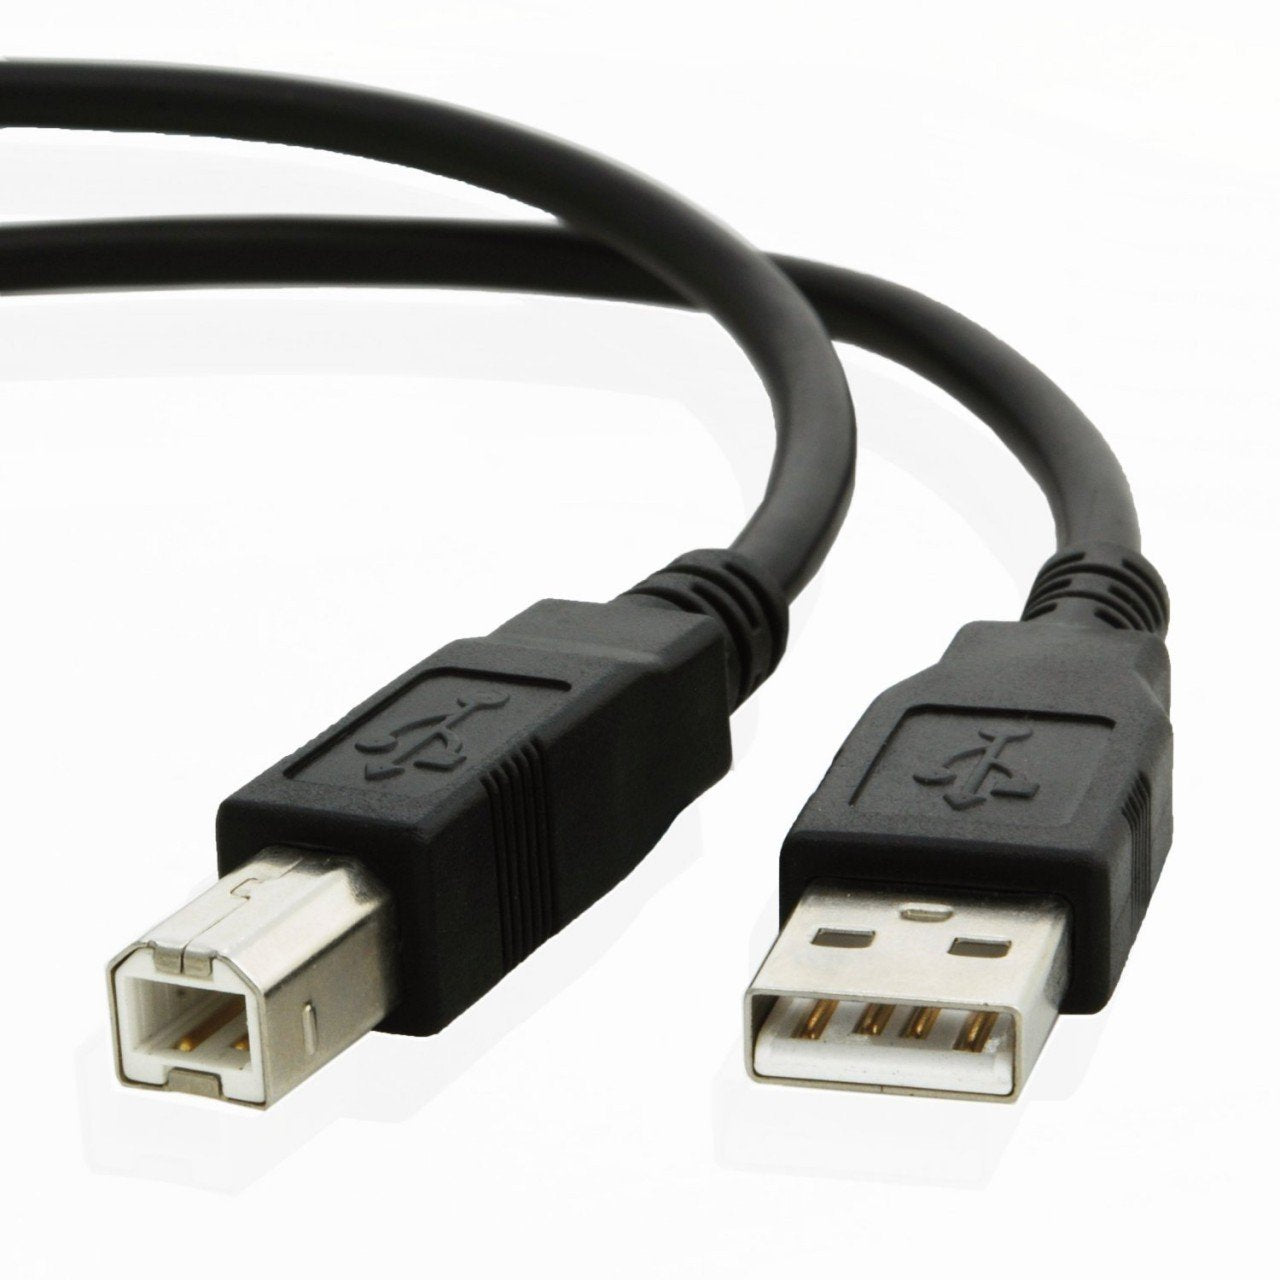 USB cable for Hp LASERJET PRO M227fdw